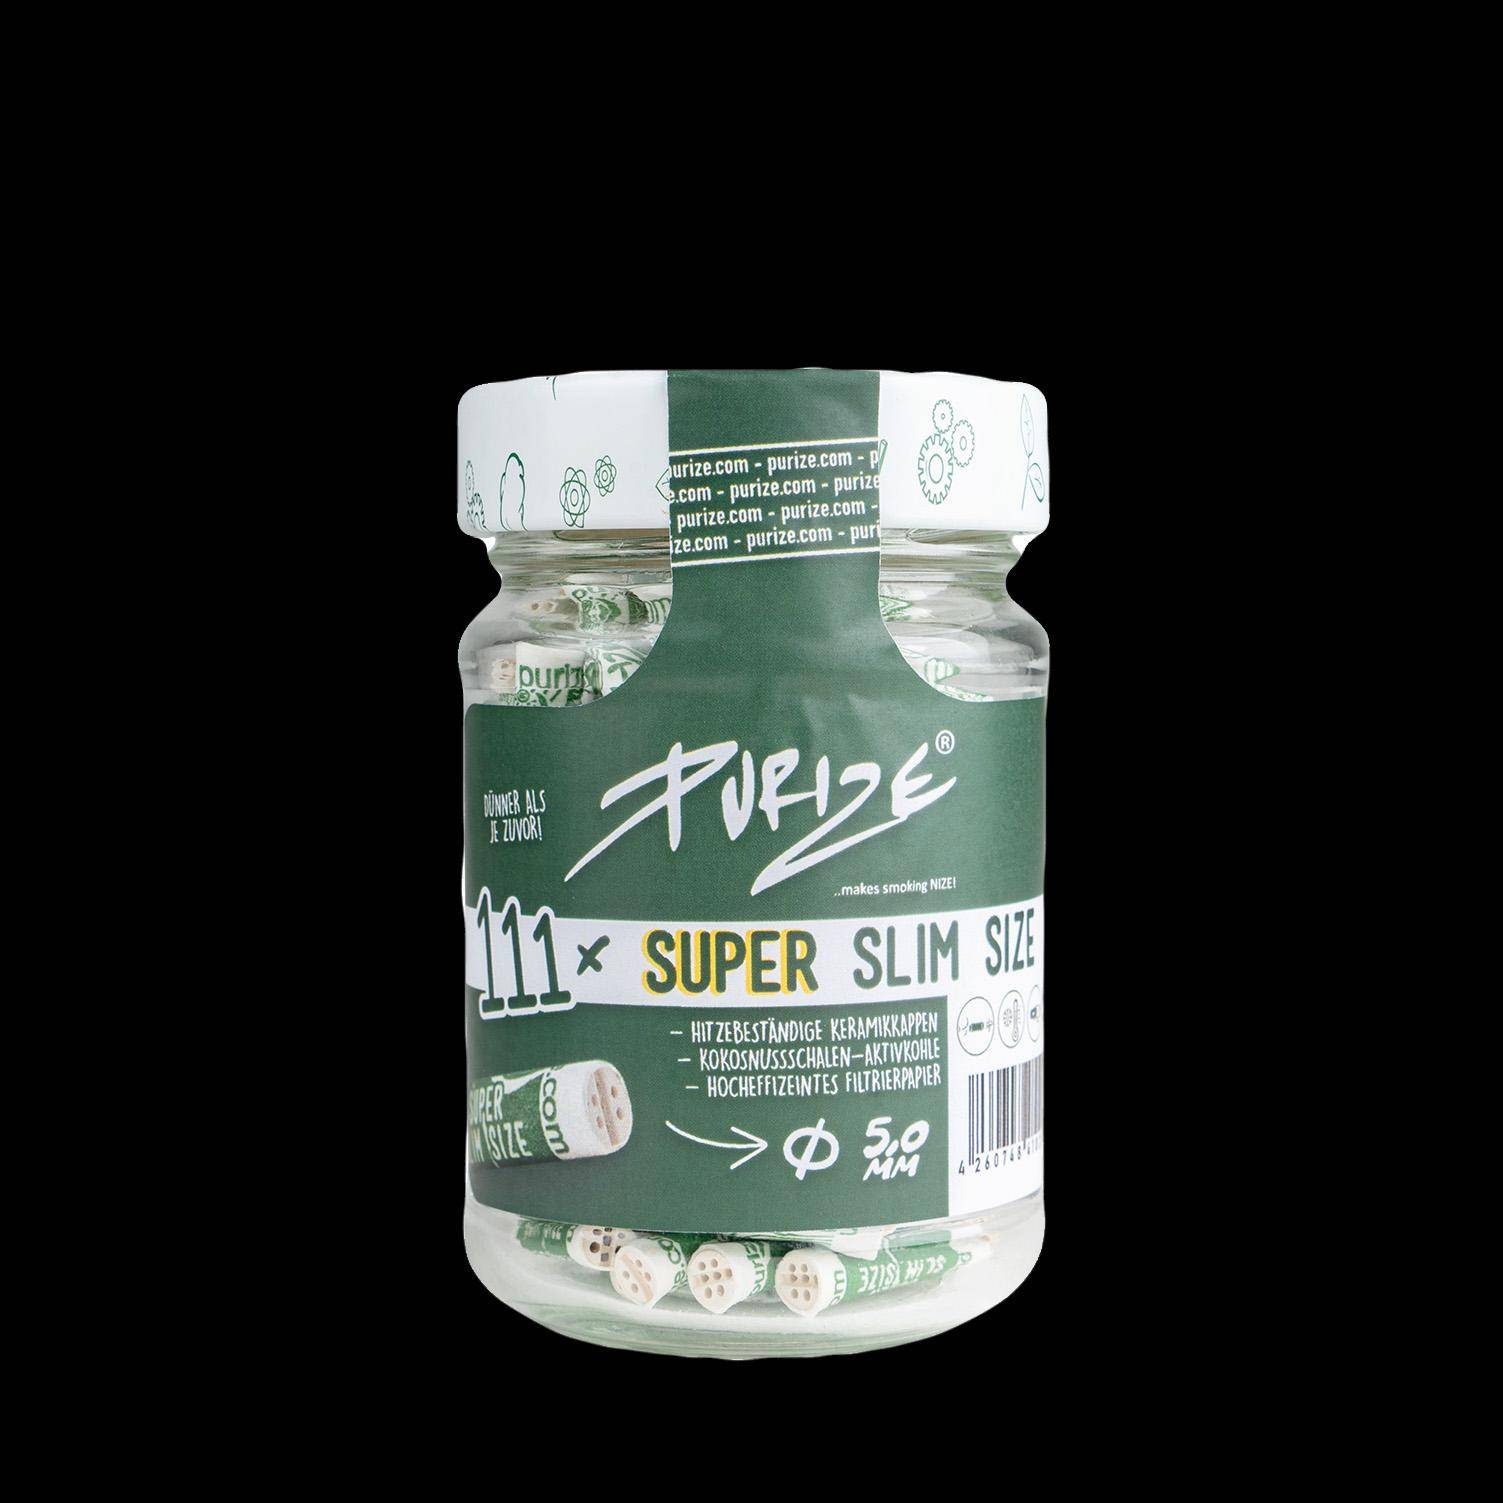 111 SUPER SLIM activated carbon filter